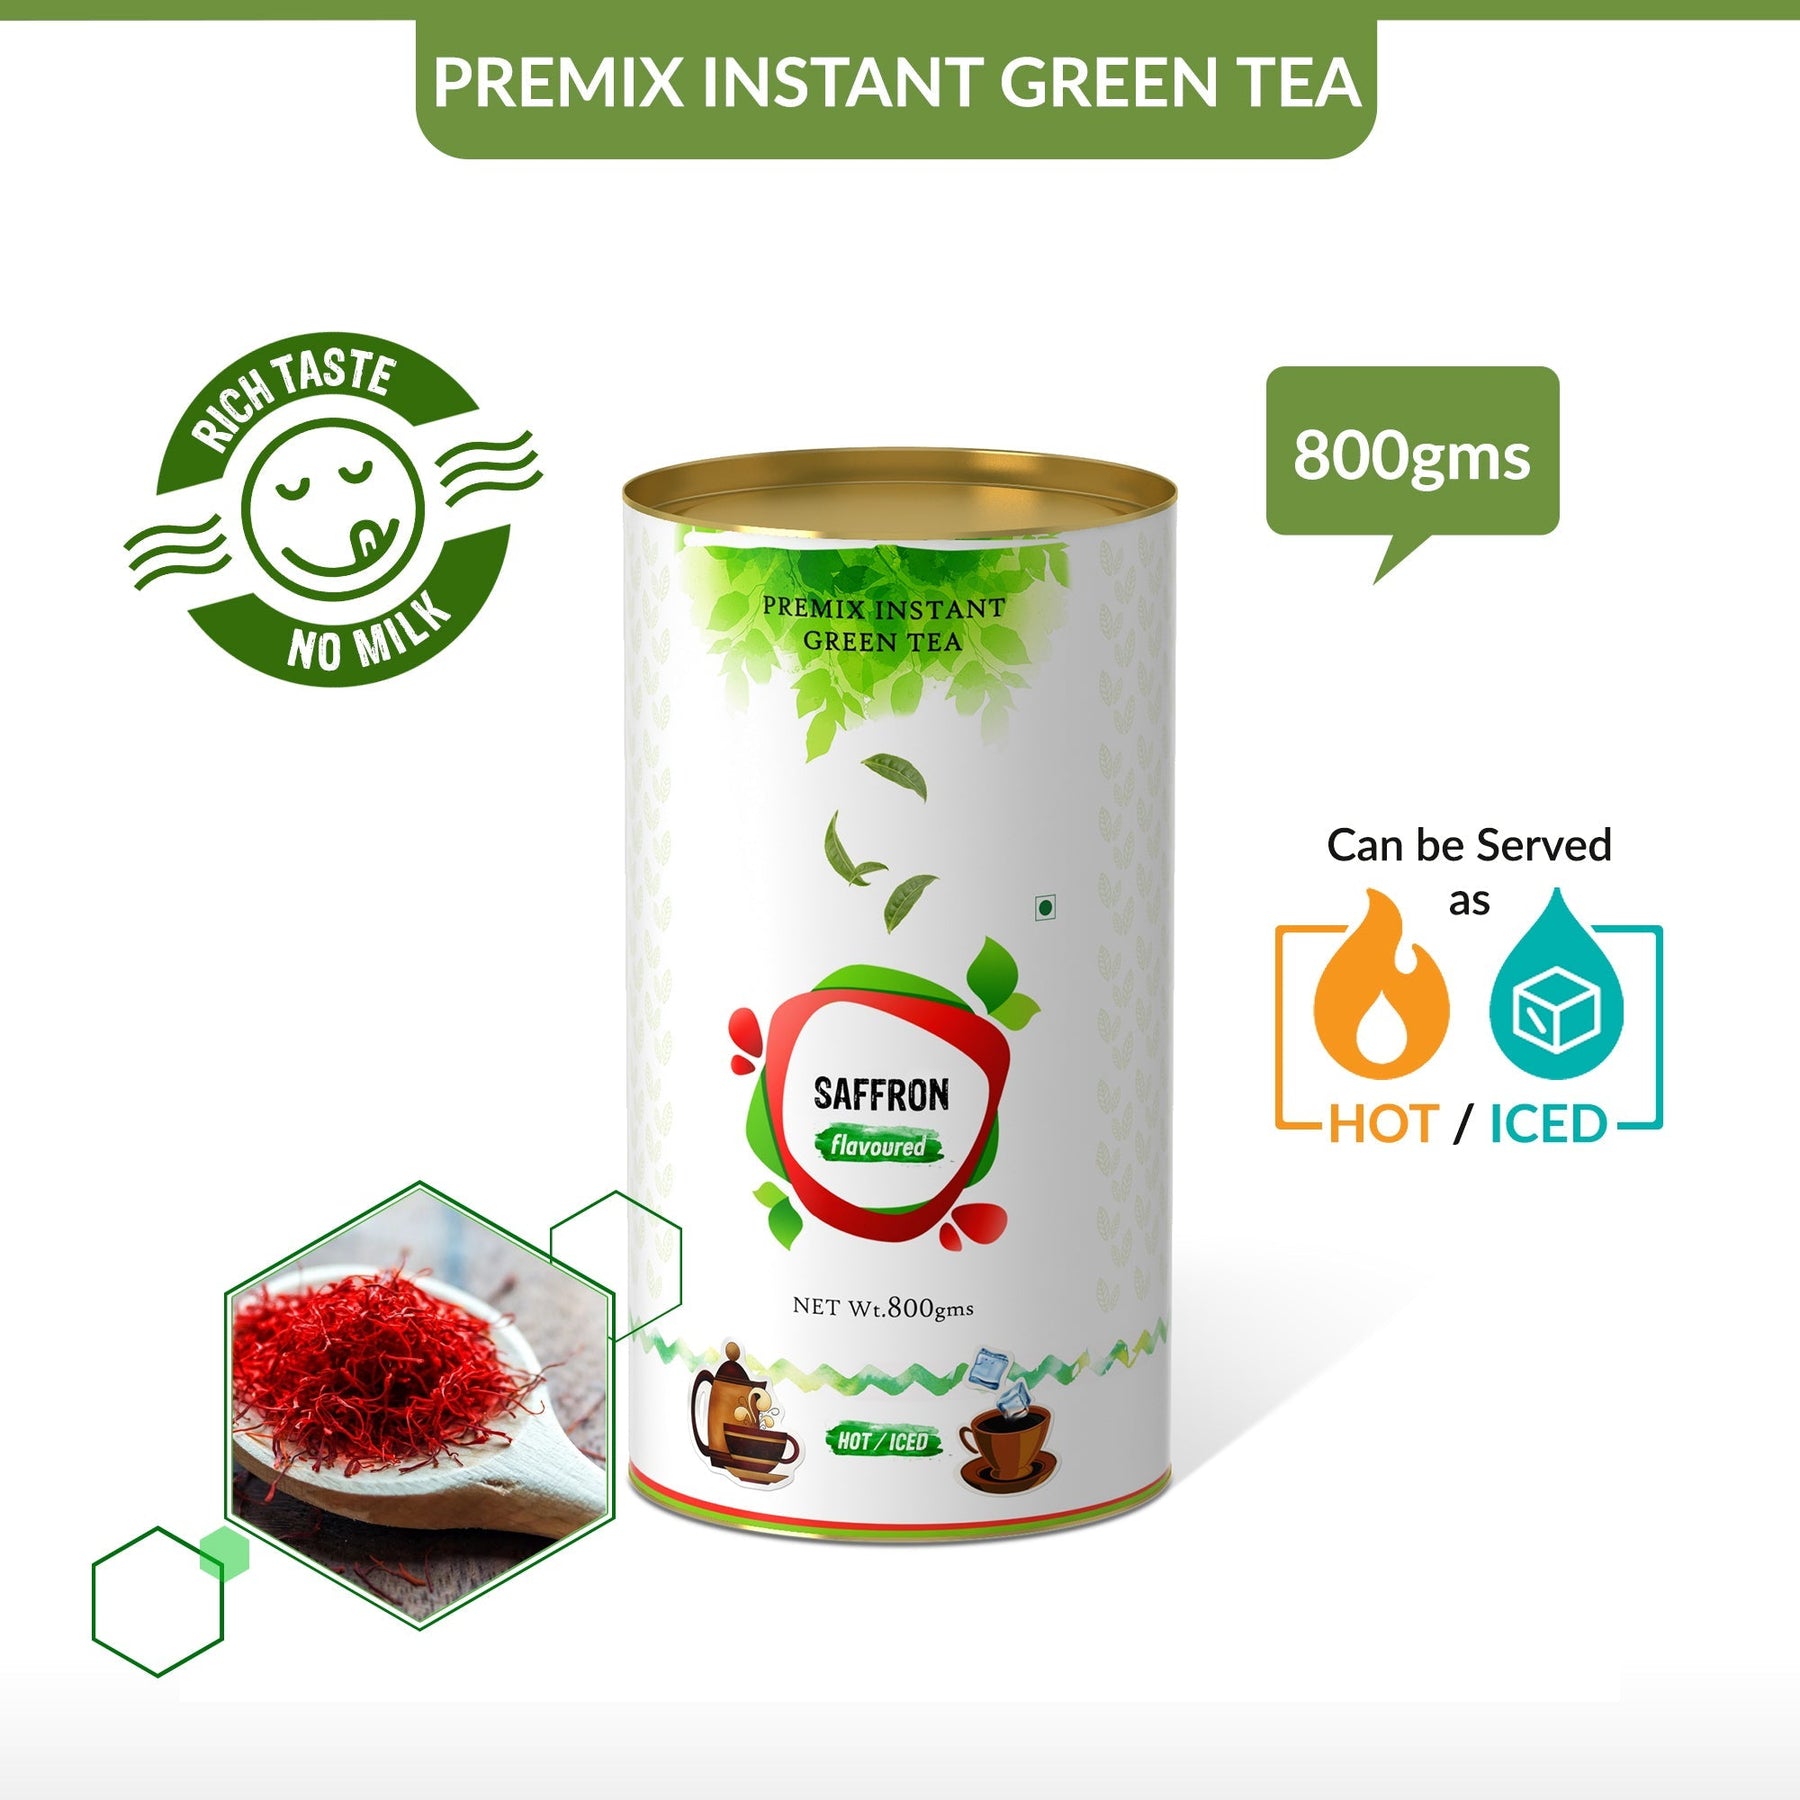 Saffron Flavored Instant Green Tea - 400 gms